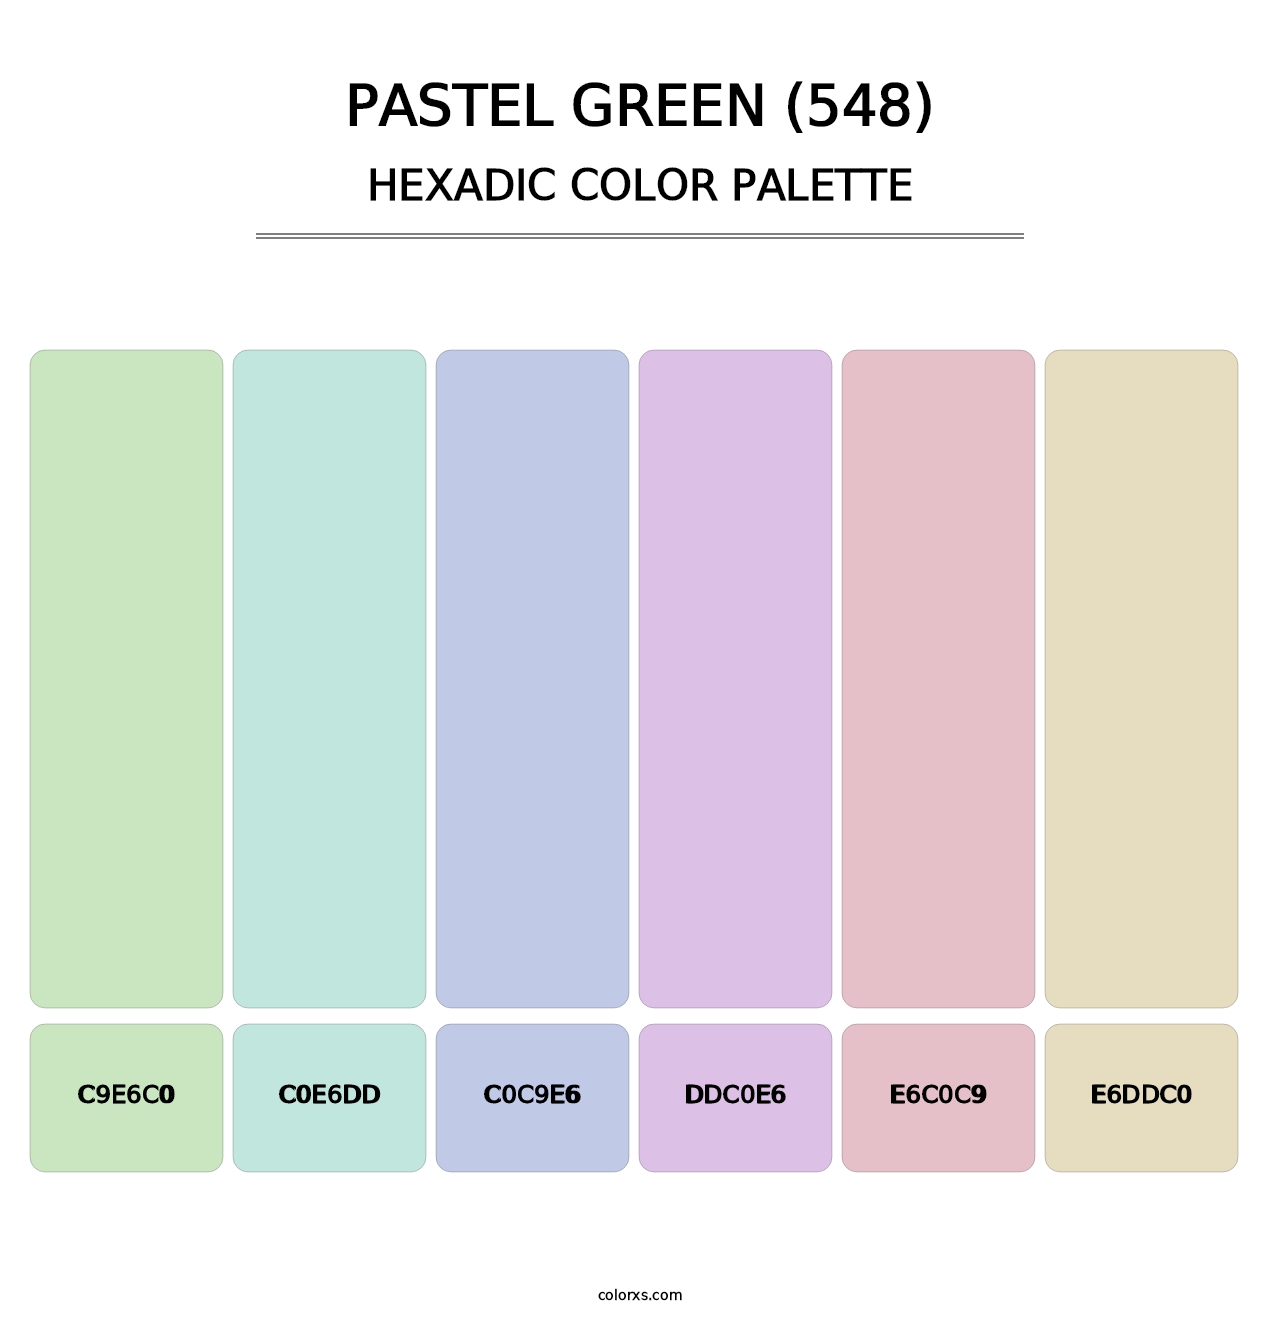 Pastel Green (548) - Hexadic Color Palette